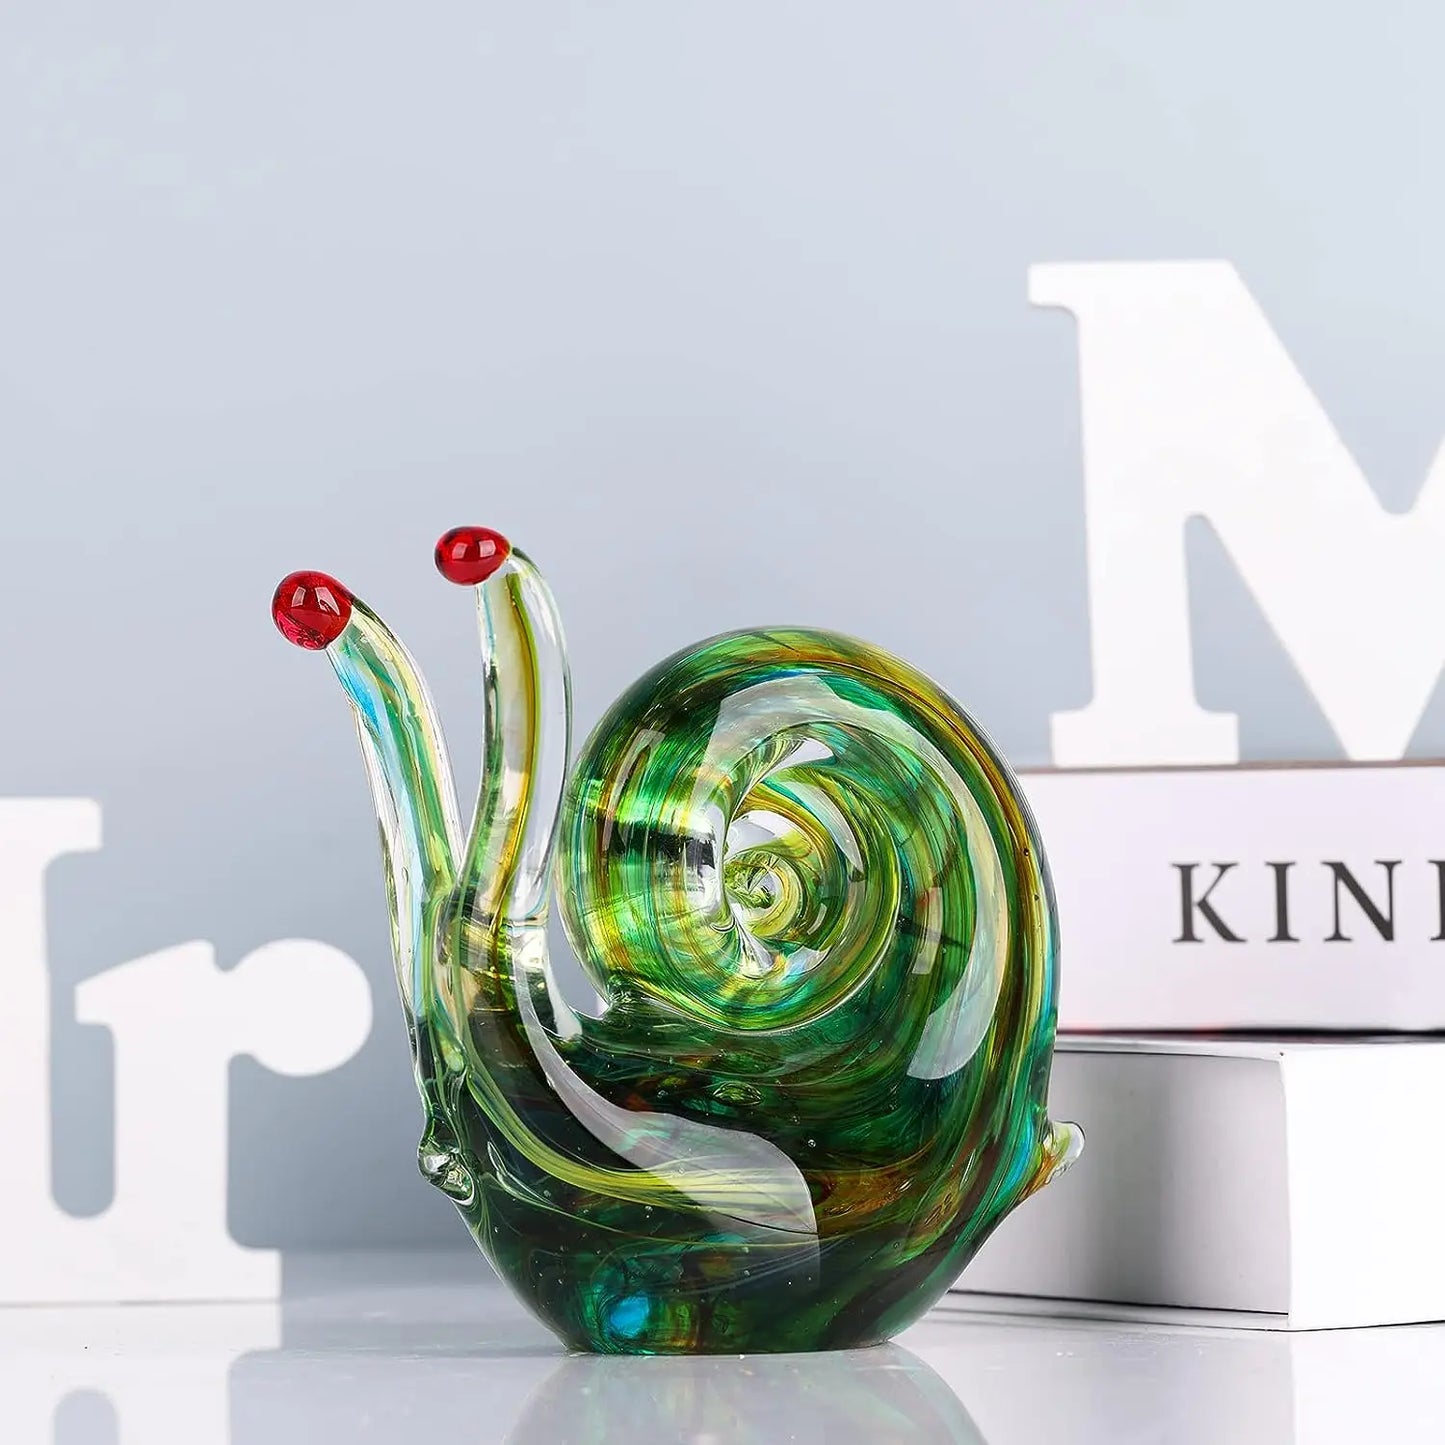 Glass Snail Sculpture Unique Handmade Colorful Murano Reptile Statue Series Home Decor Accessories Ornaments Gifts